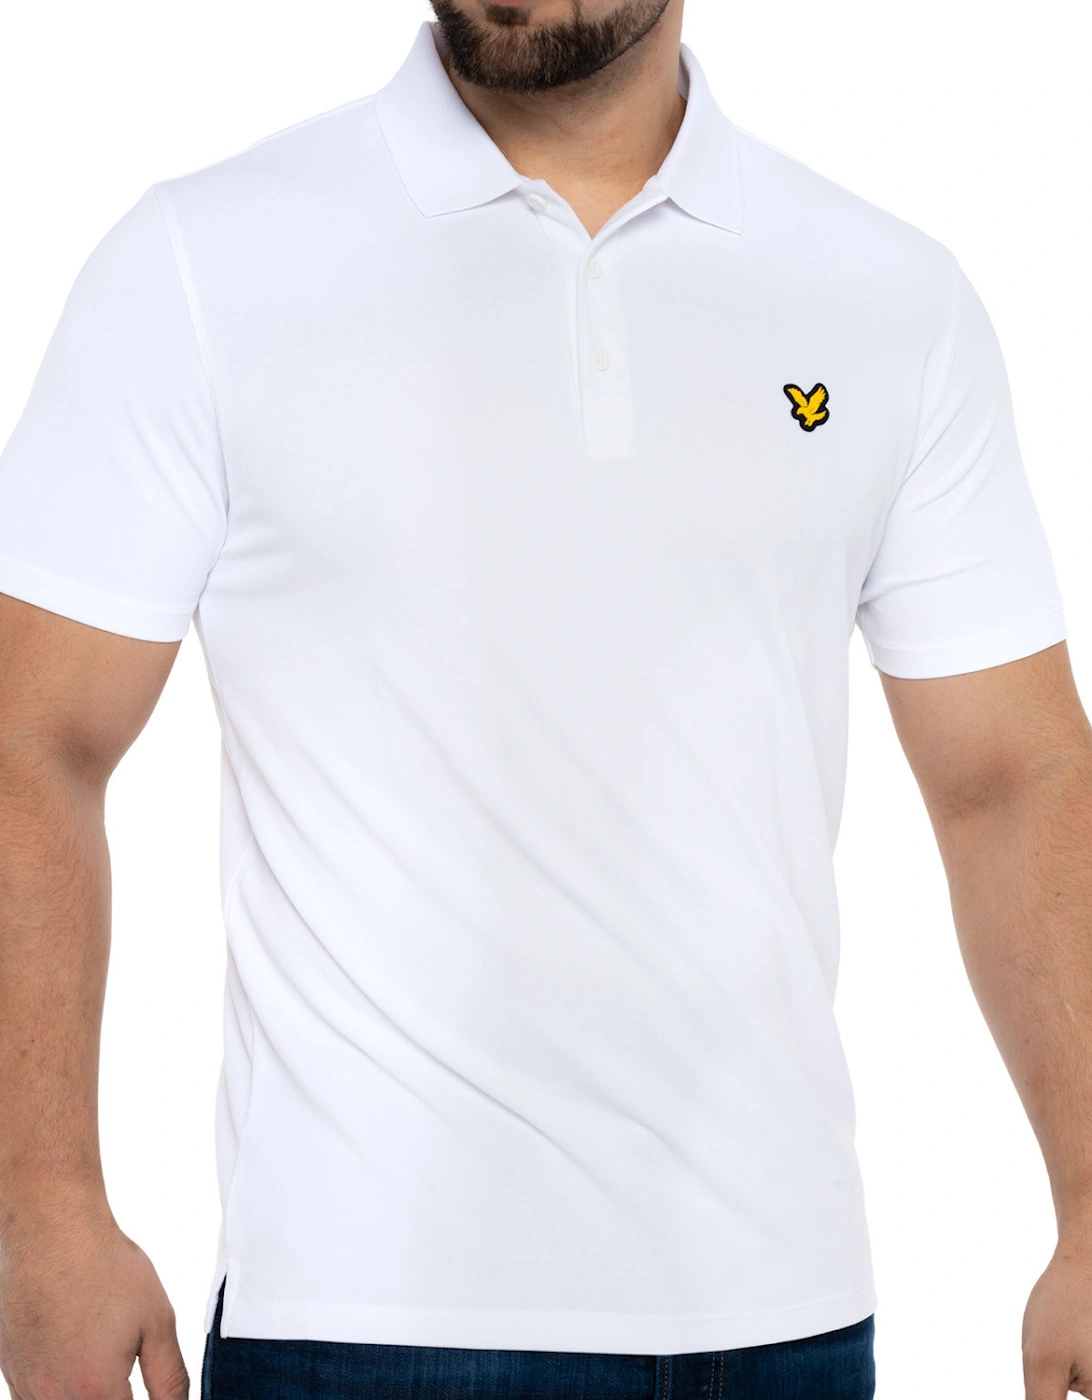 Lyle & Scott Mens Golf Technical Polo Shirt (White)